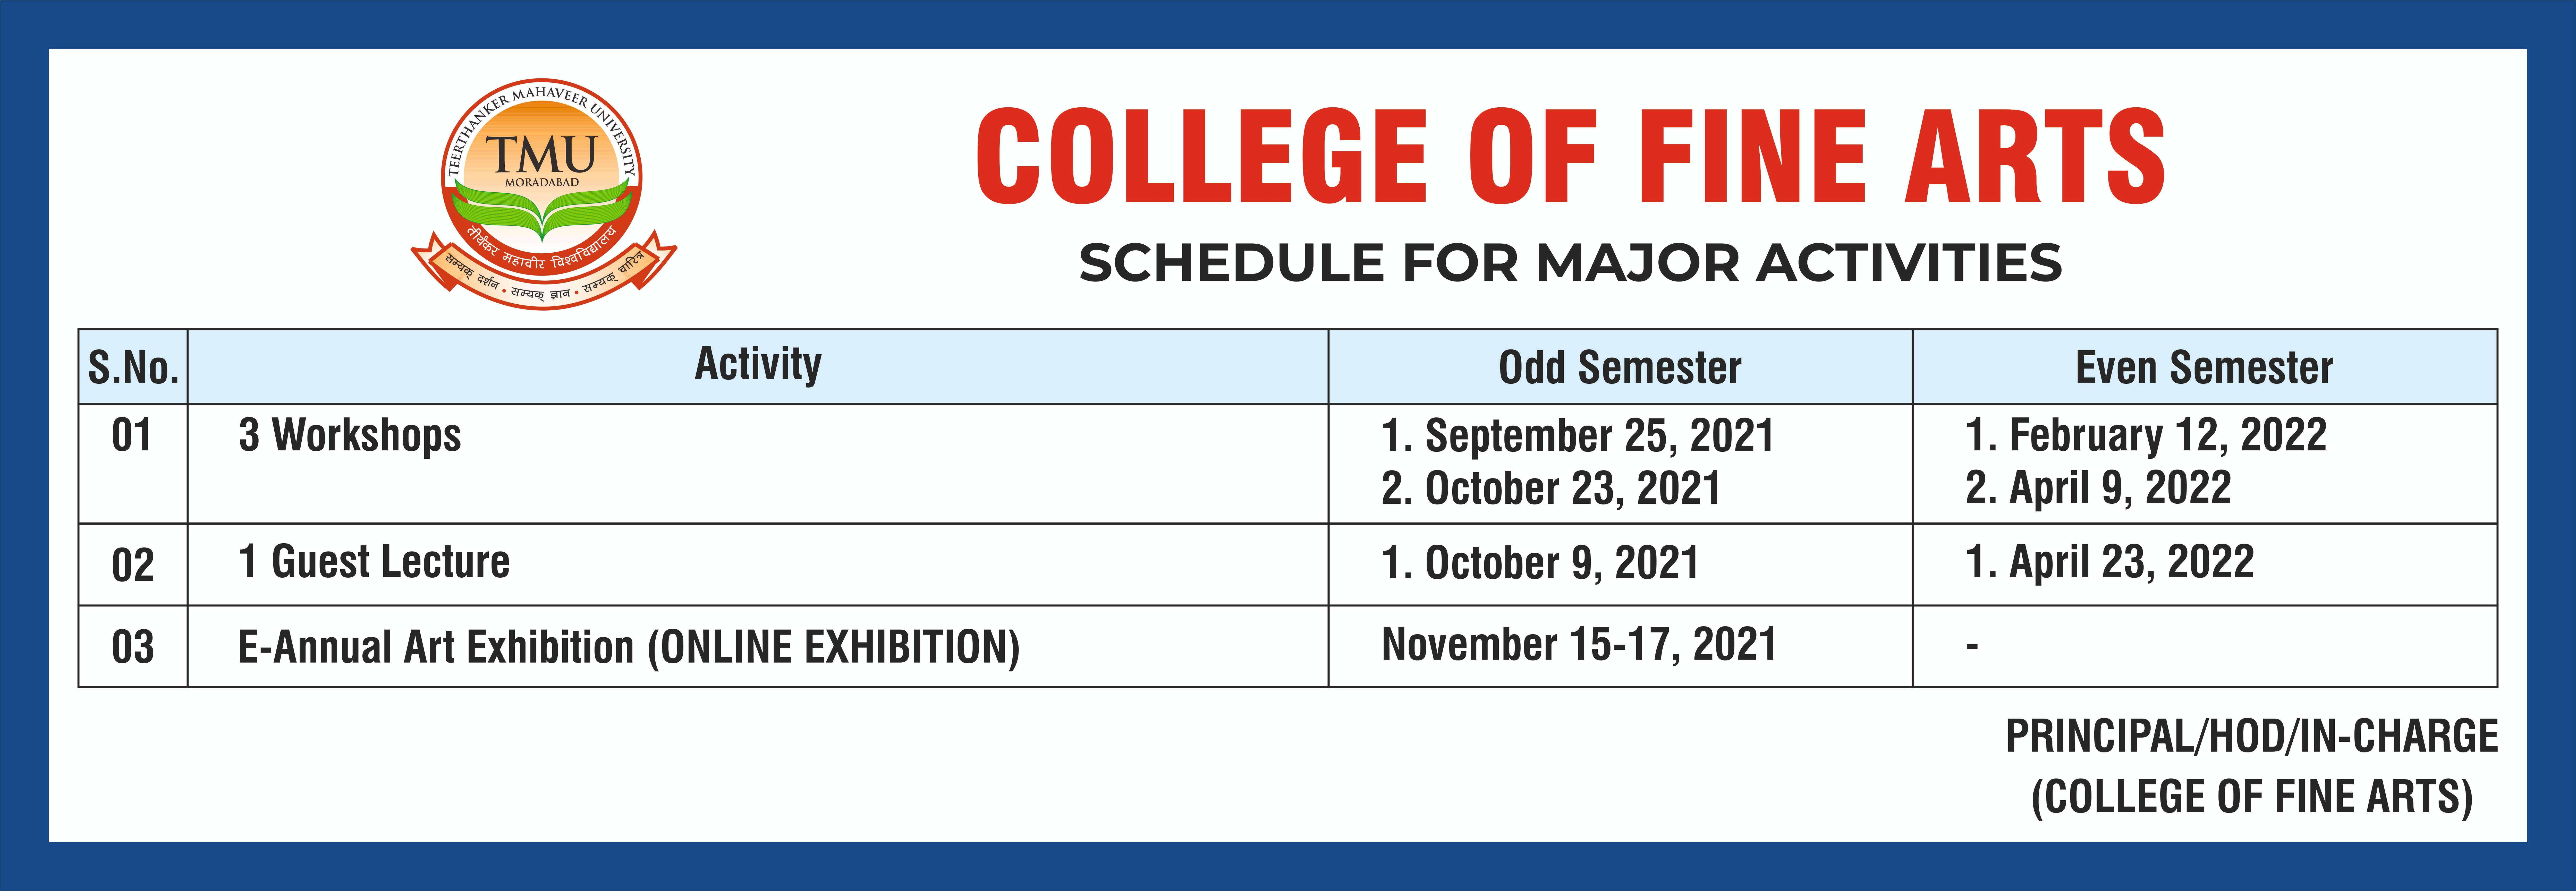 Academic Calendar 202223 College of Fine Arts BFA/MFA TMU